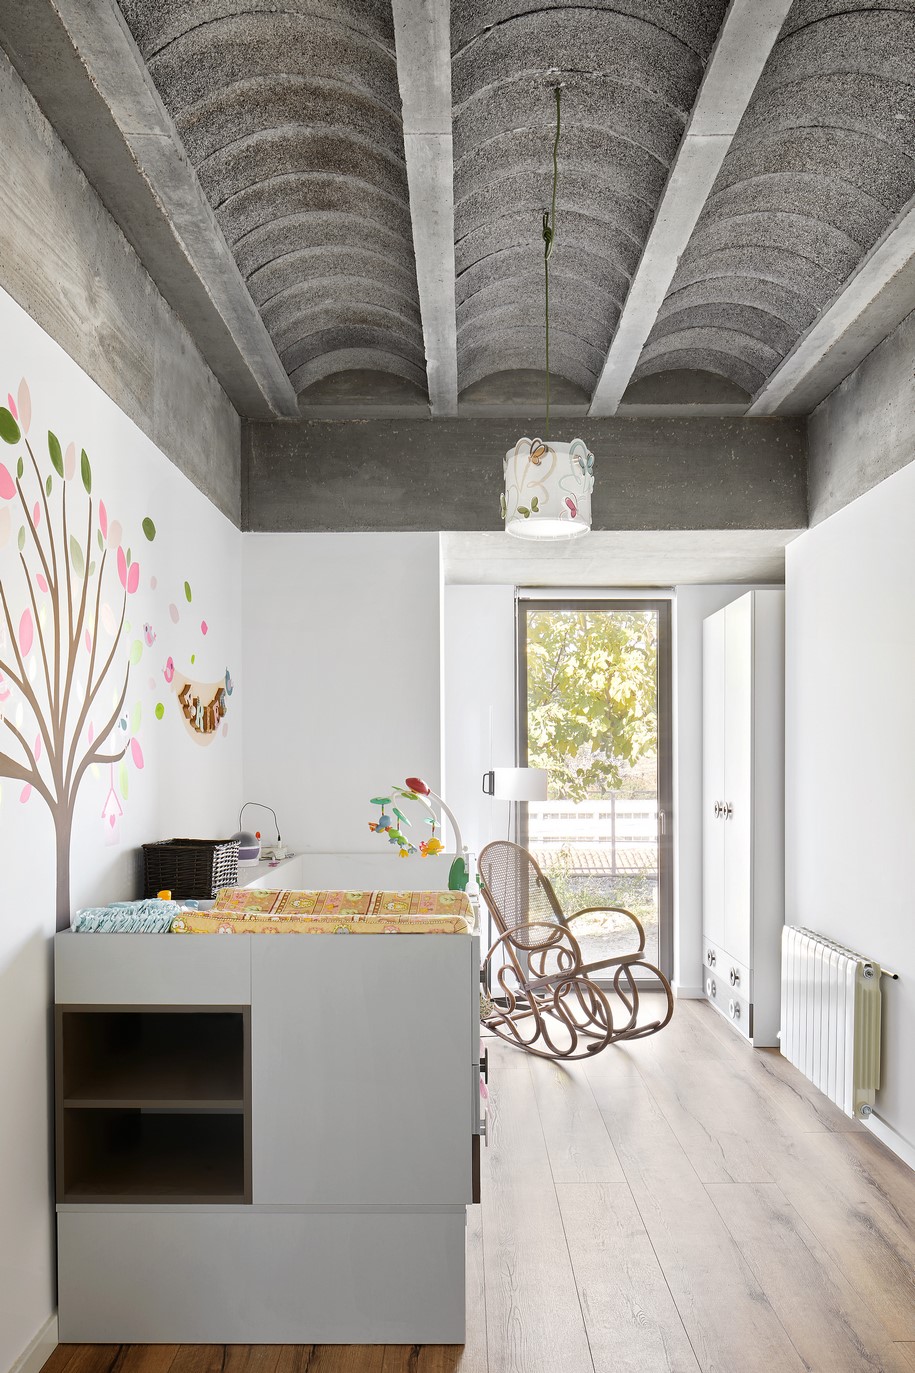 Marian, Single-family house,  Ullastrell, Barcelona, miliunarquitectura, 2017, Carles Marcos